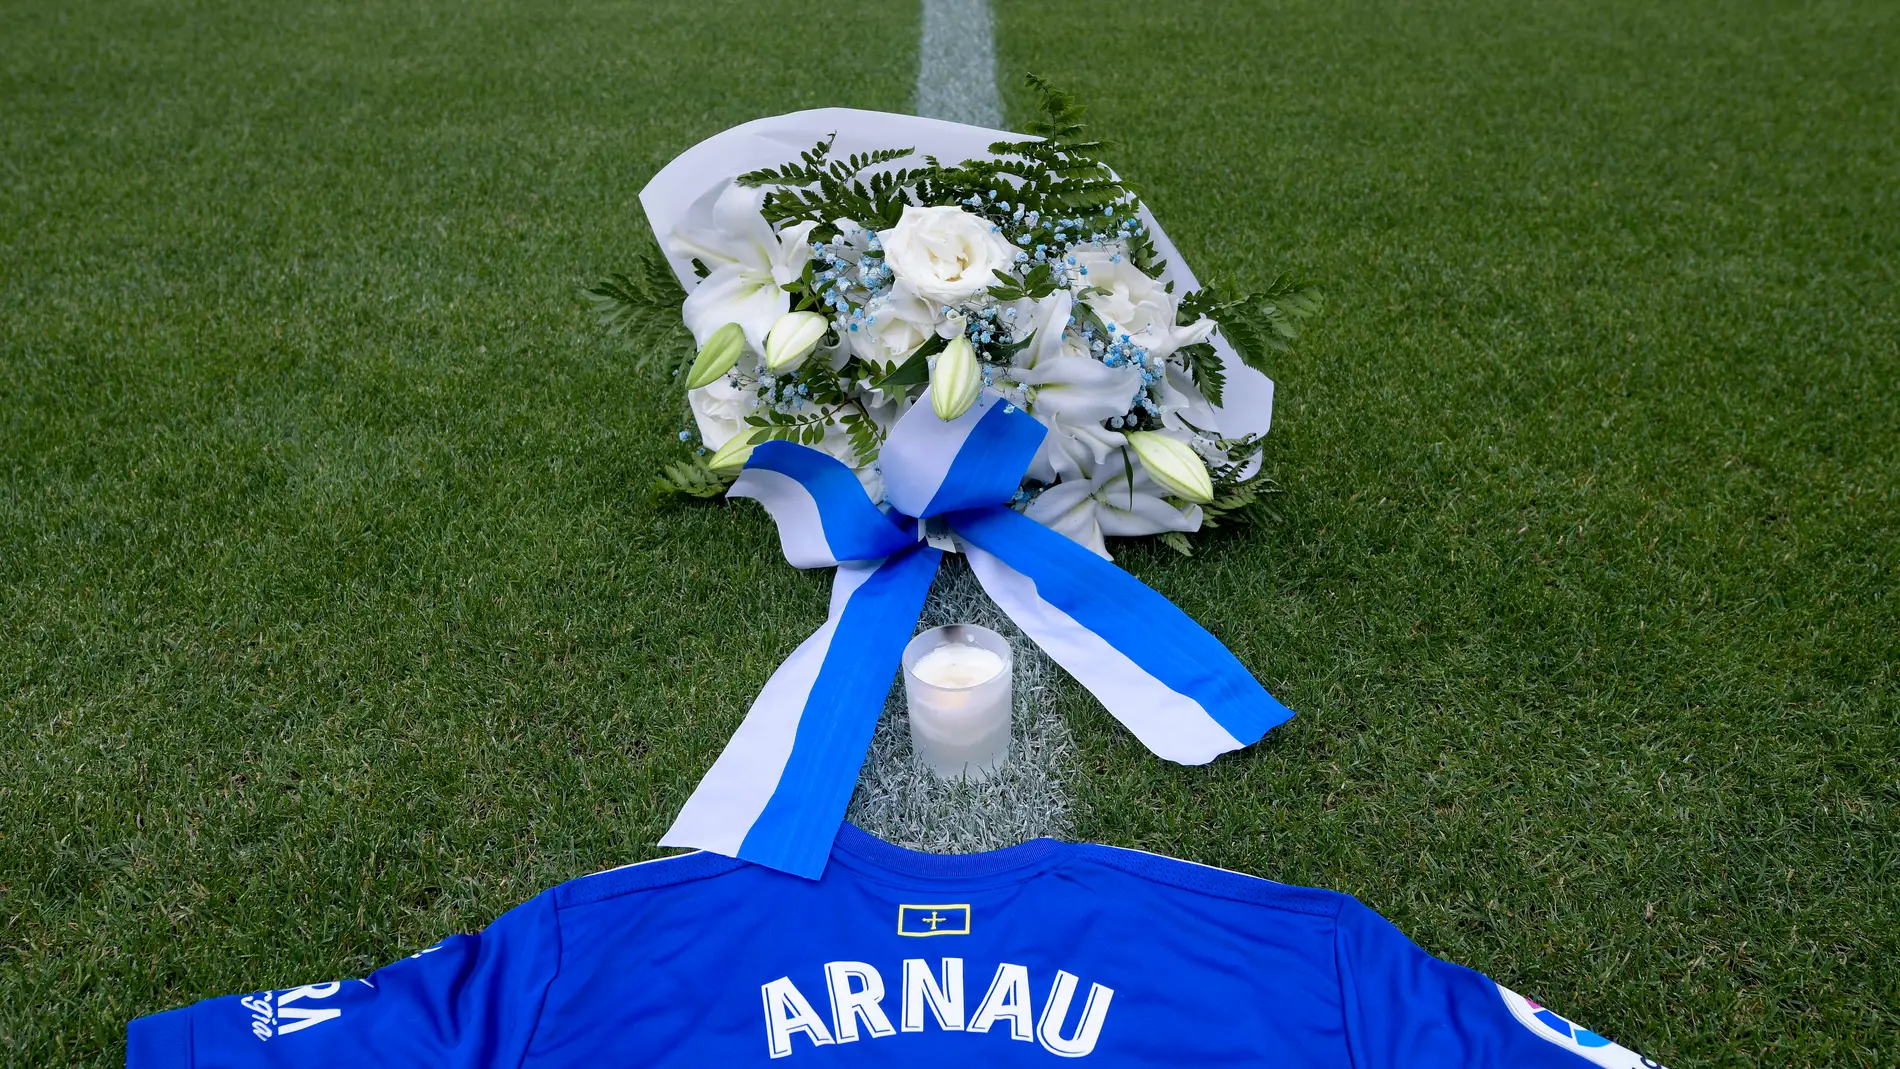 Homenaje a Arnau del Real Oviedo